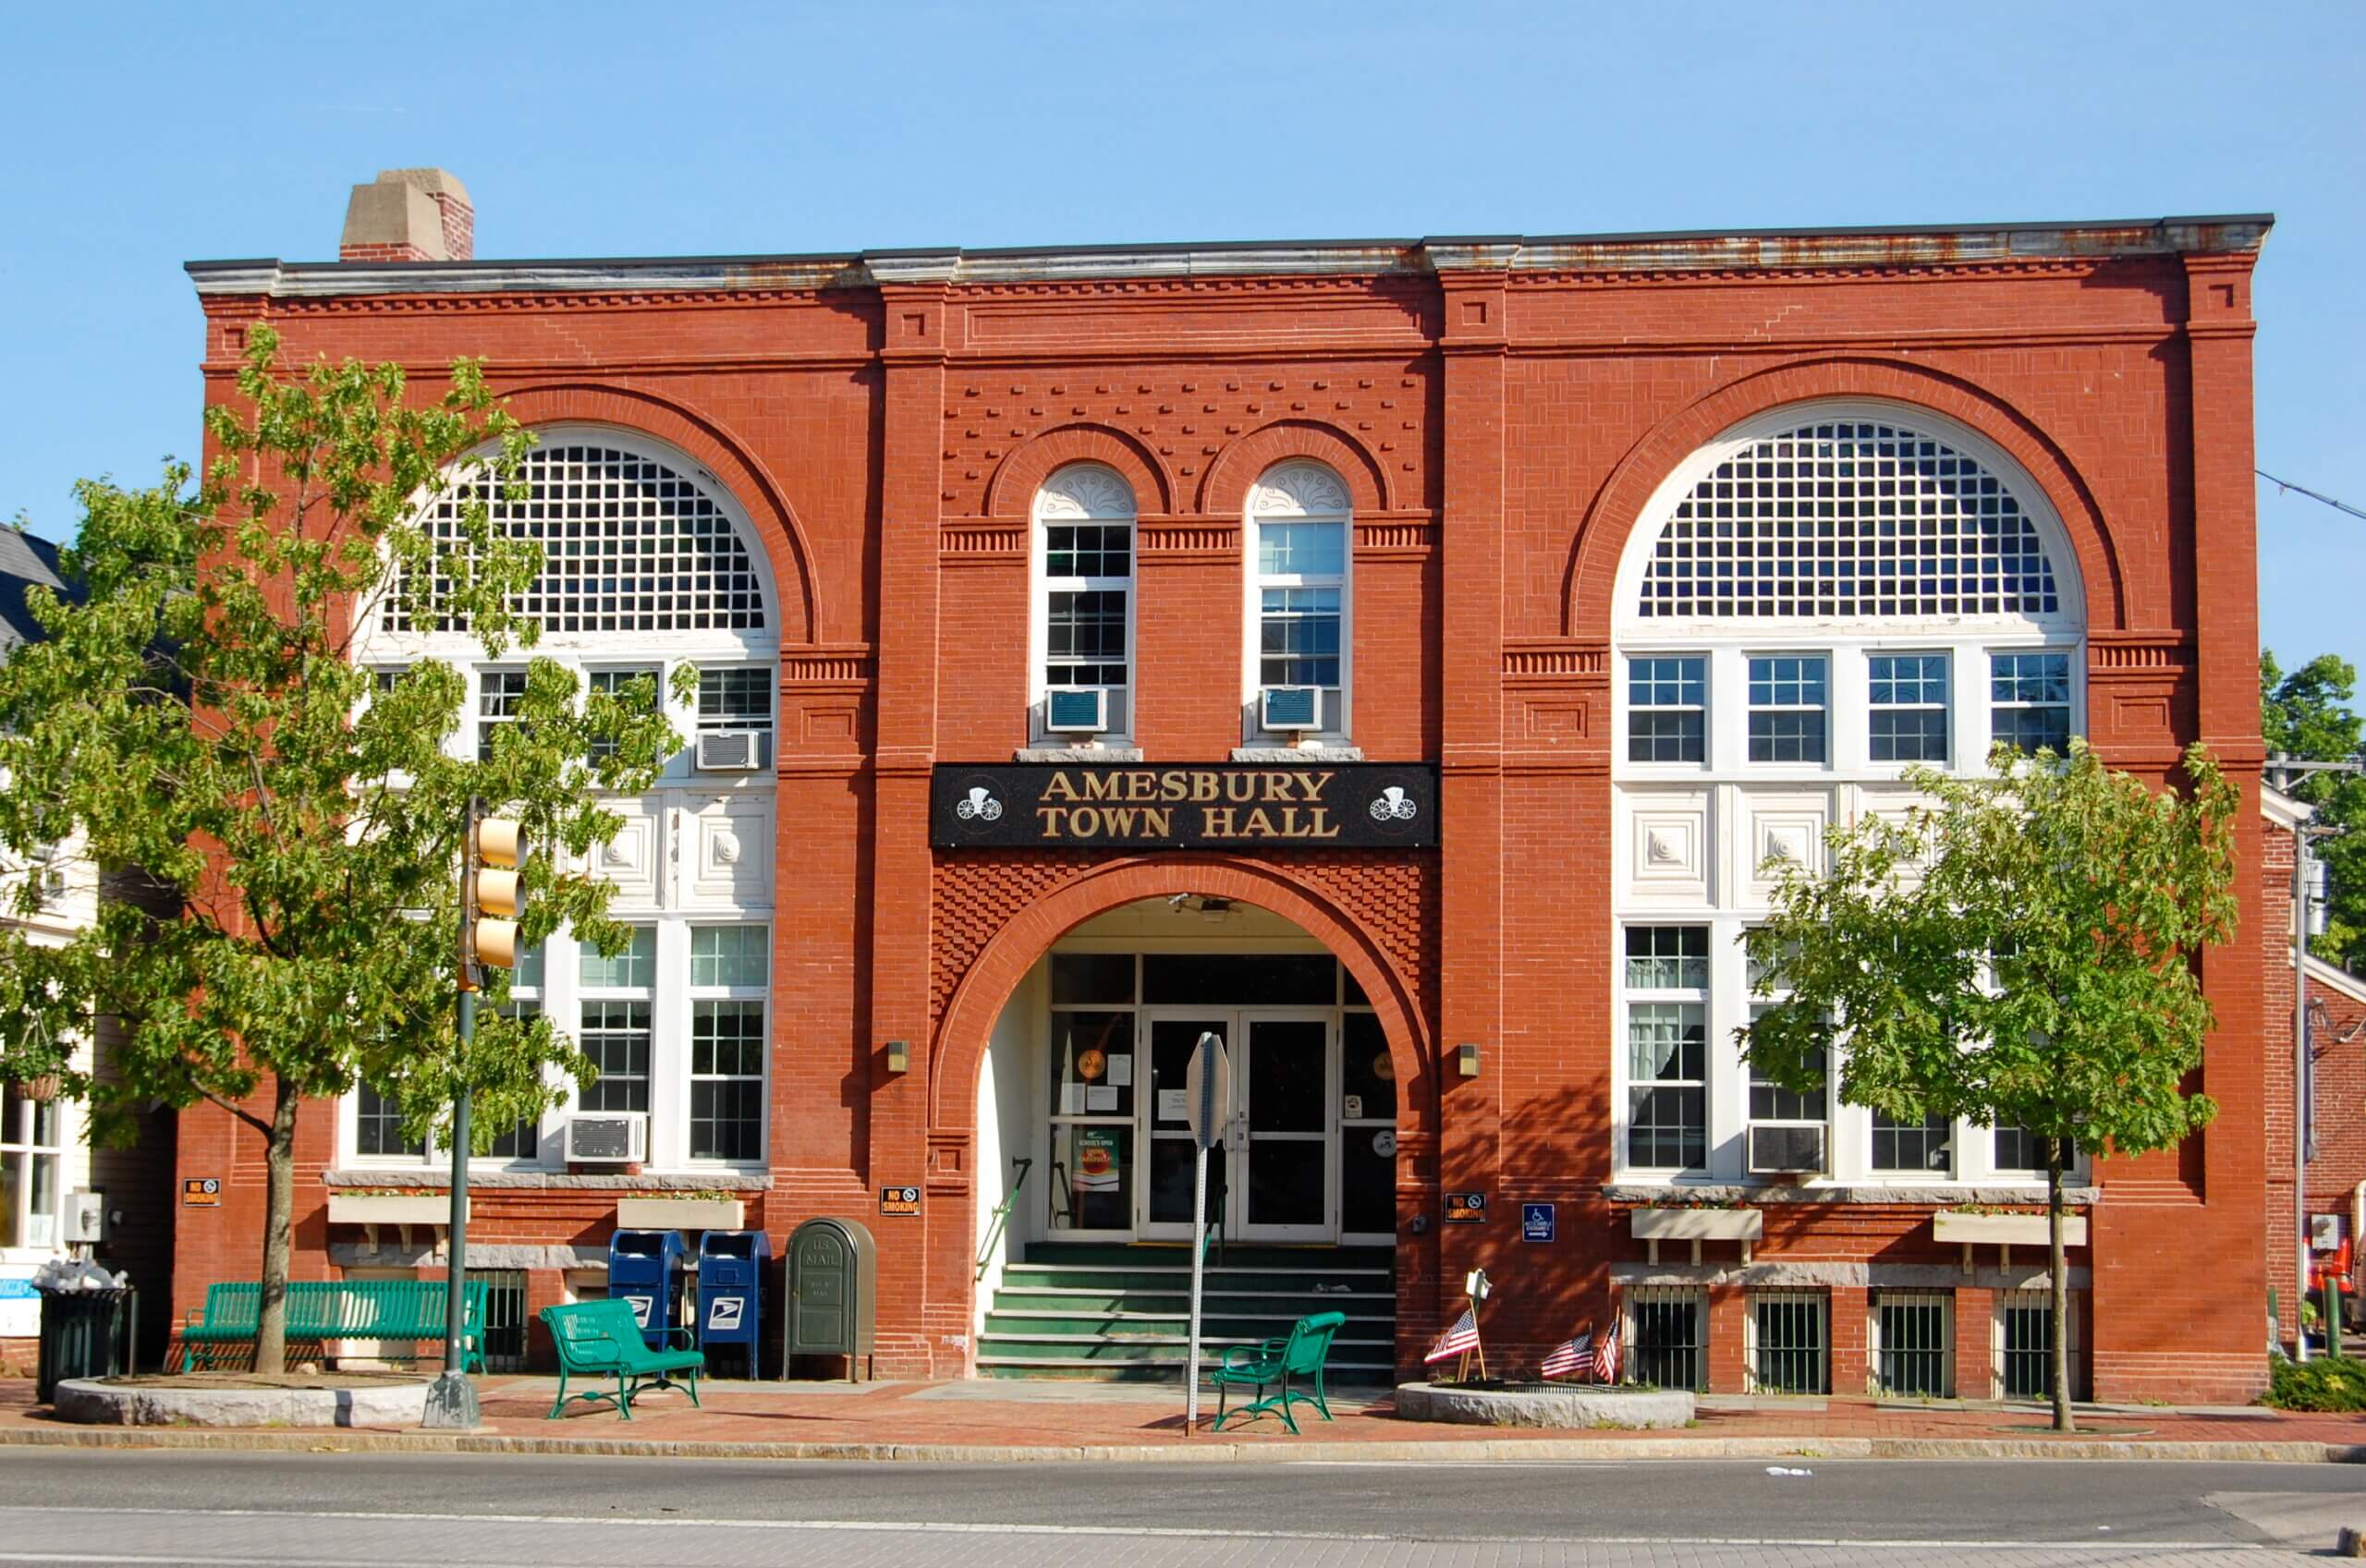 Amesbury, Massachusetts Town Hall